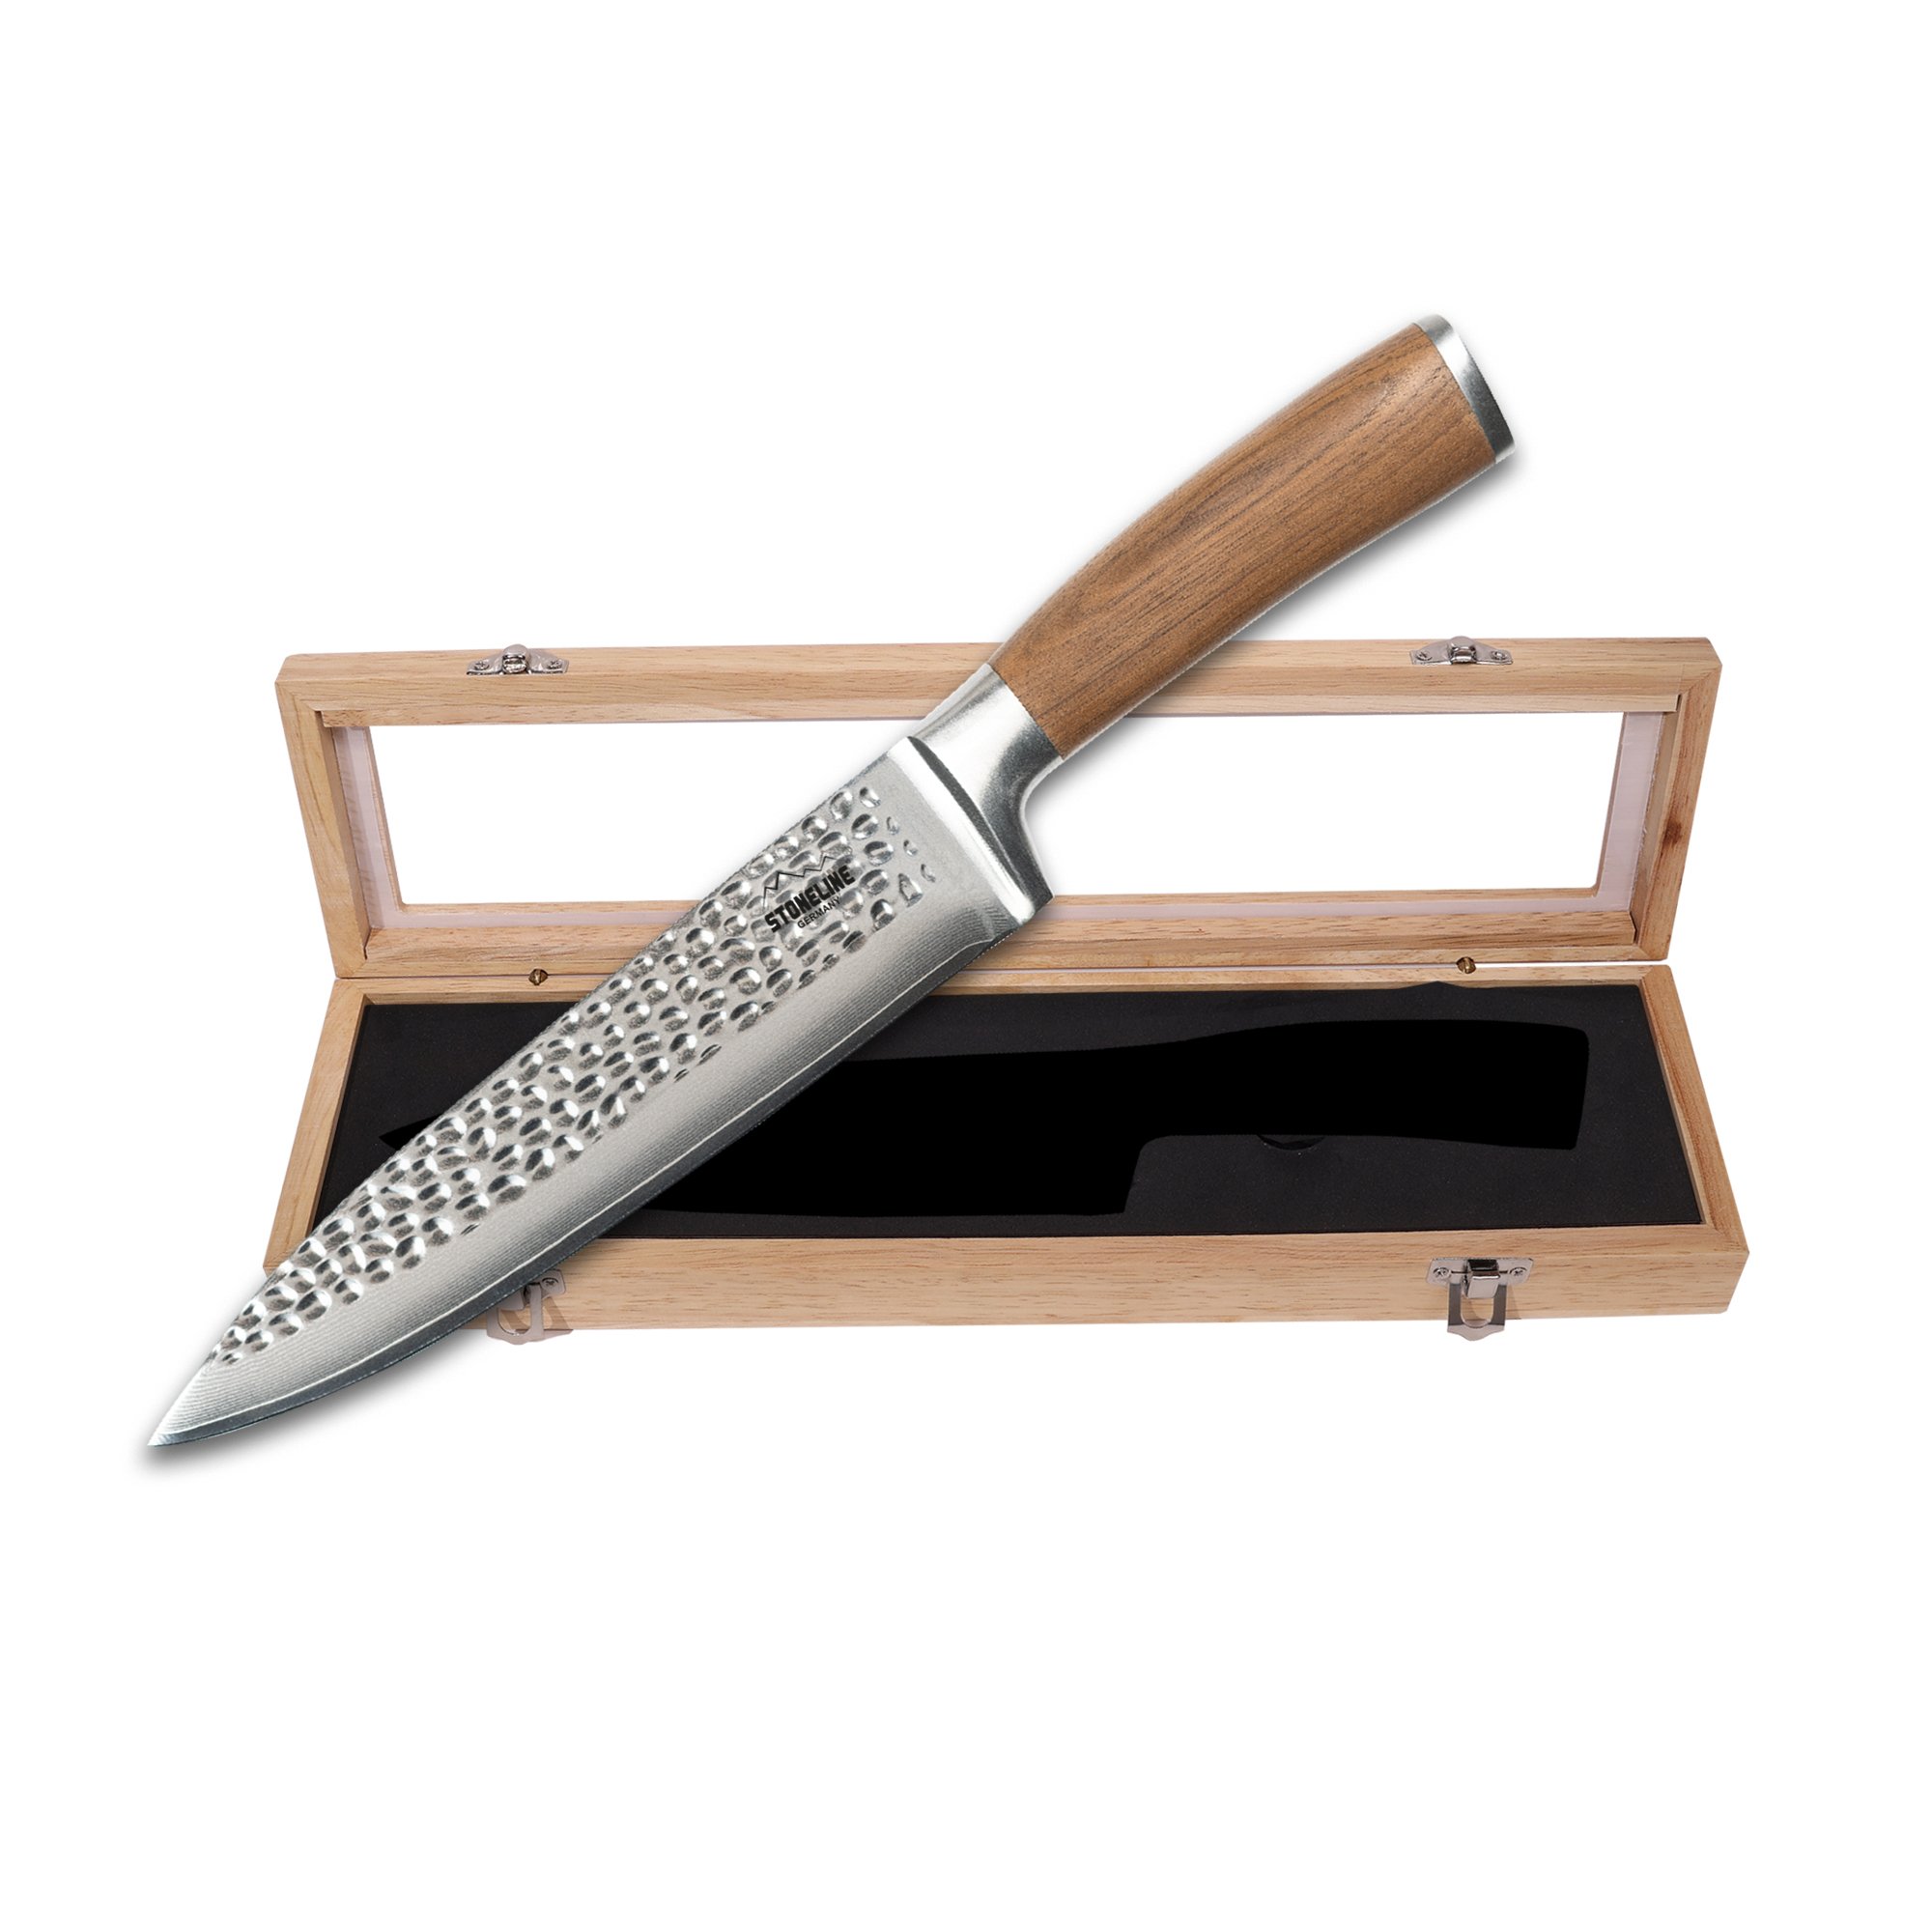 STONELINE® Damascus Steel Chef's Knife 34 cm, Hammered Knife, Wooden Storage Box